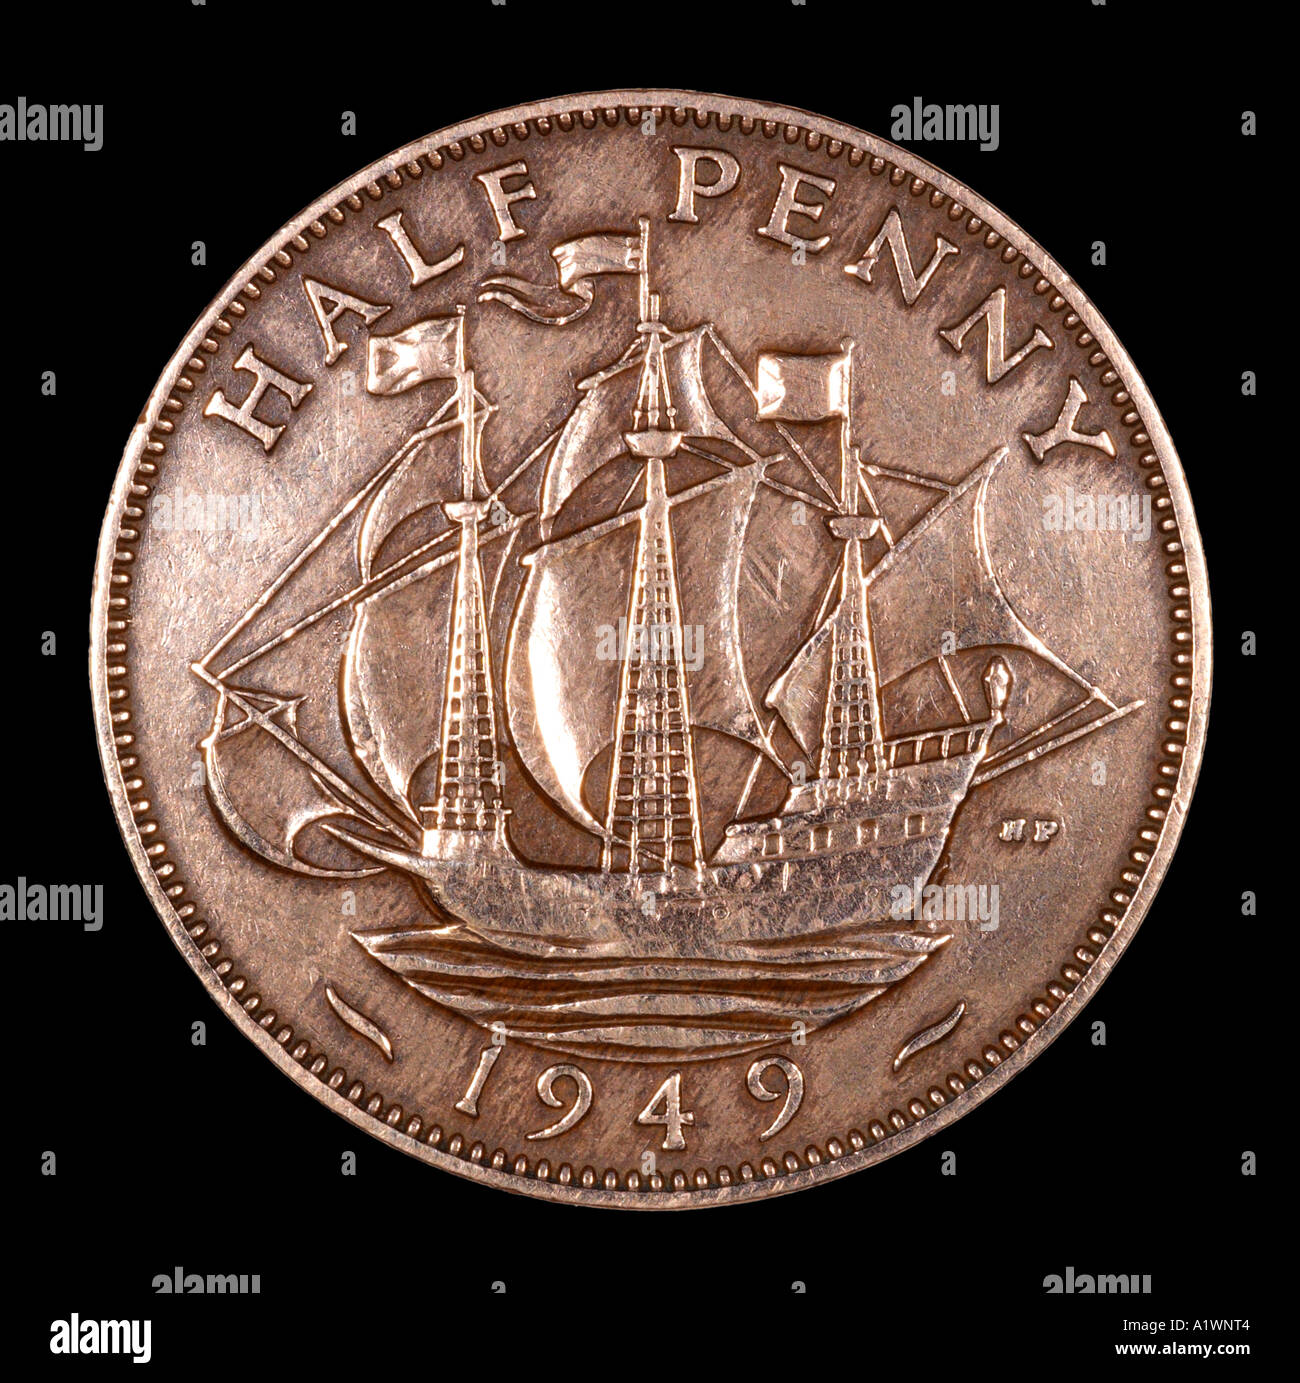 King George VI Reg fid def pre decimal half penny old pence P 1949 copper bright boat sail maritime marine frigate Stock Photo